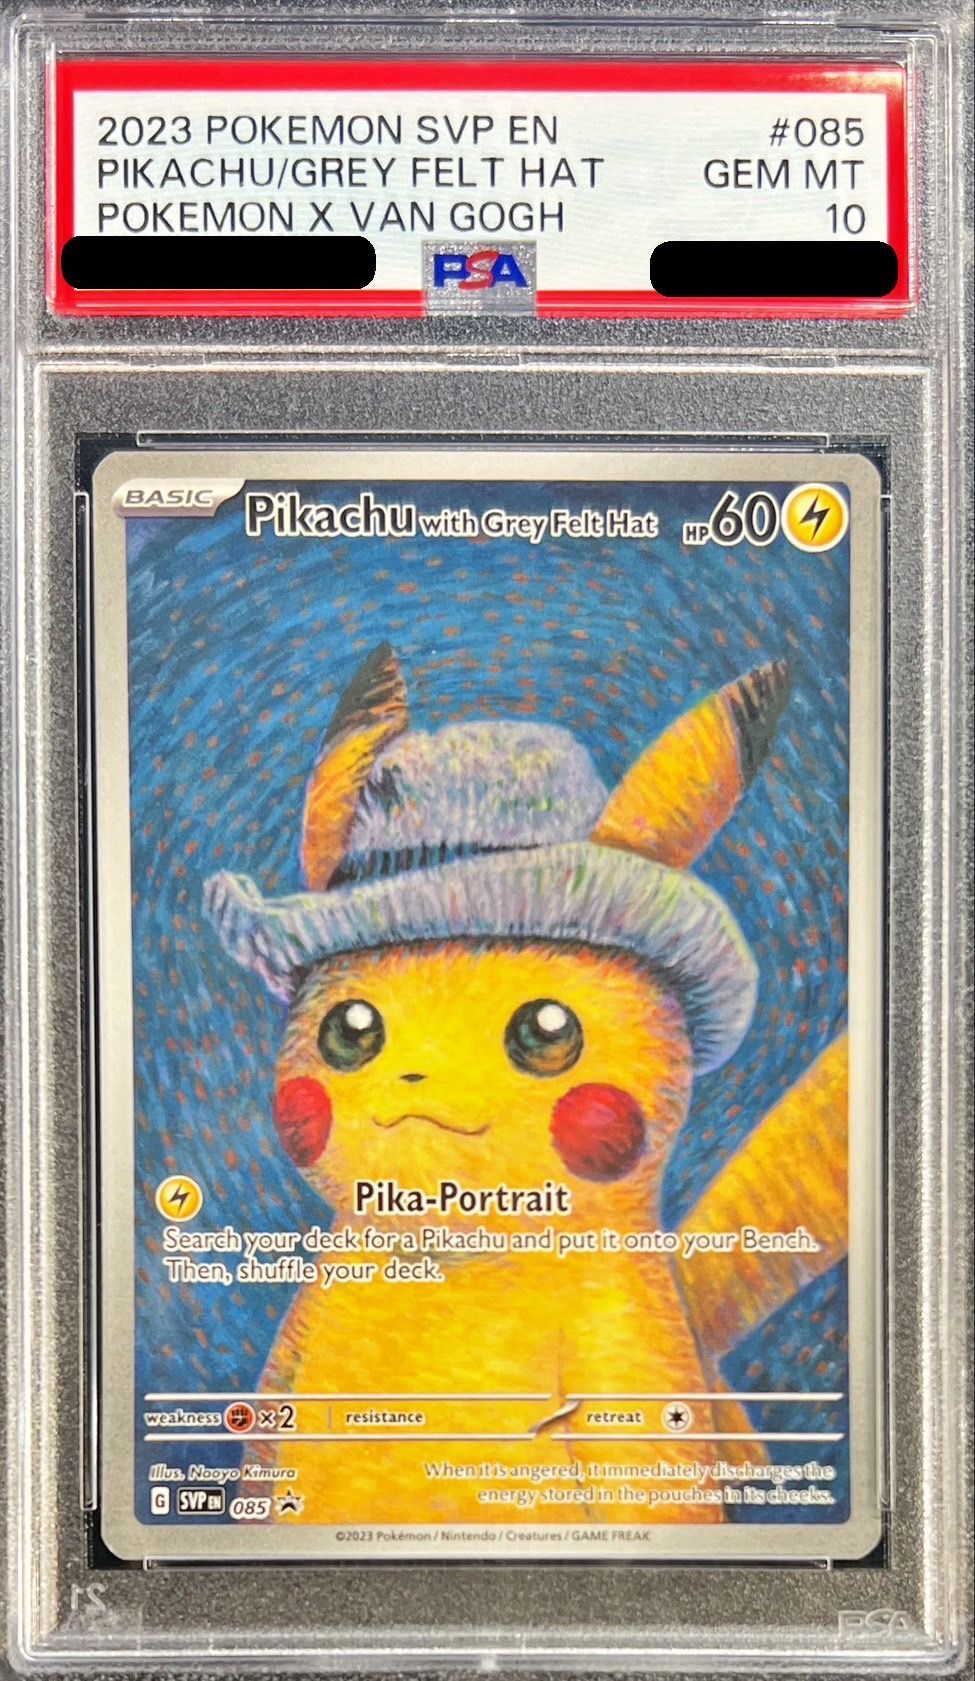 PSA10鑑定済〕Pikachu with Grey Felt Hat(ゴッホピカチュウ)【P】{085